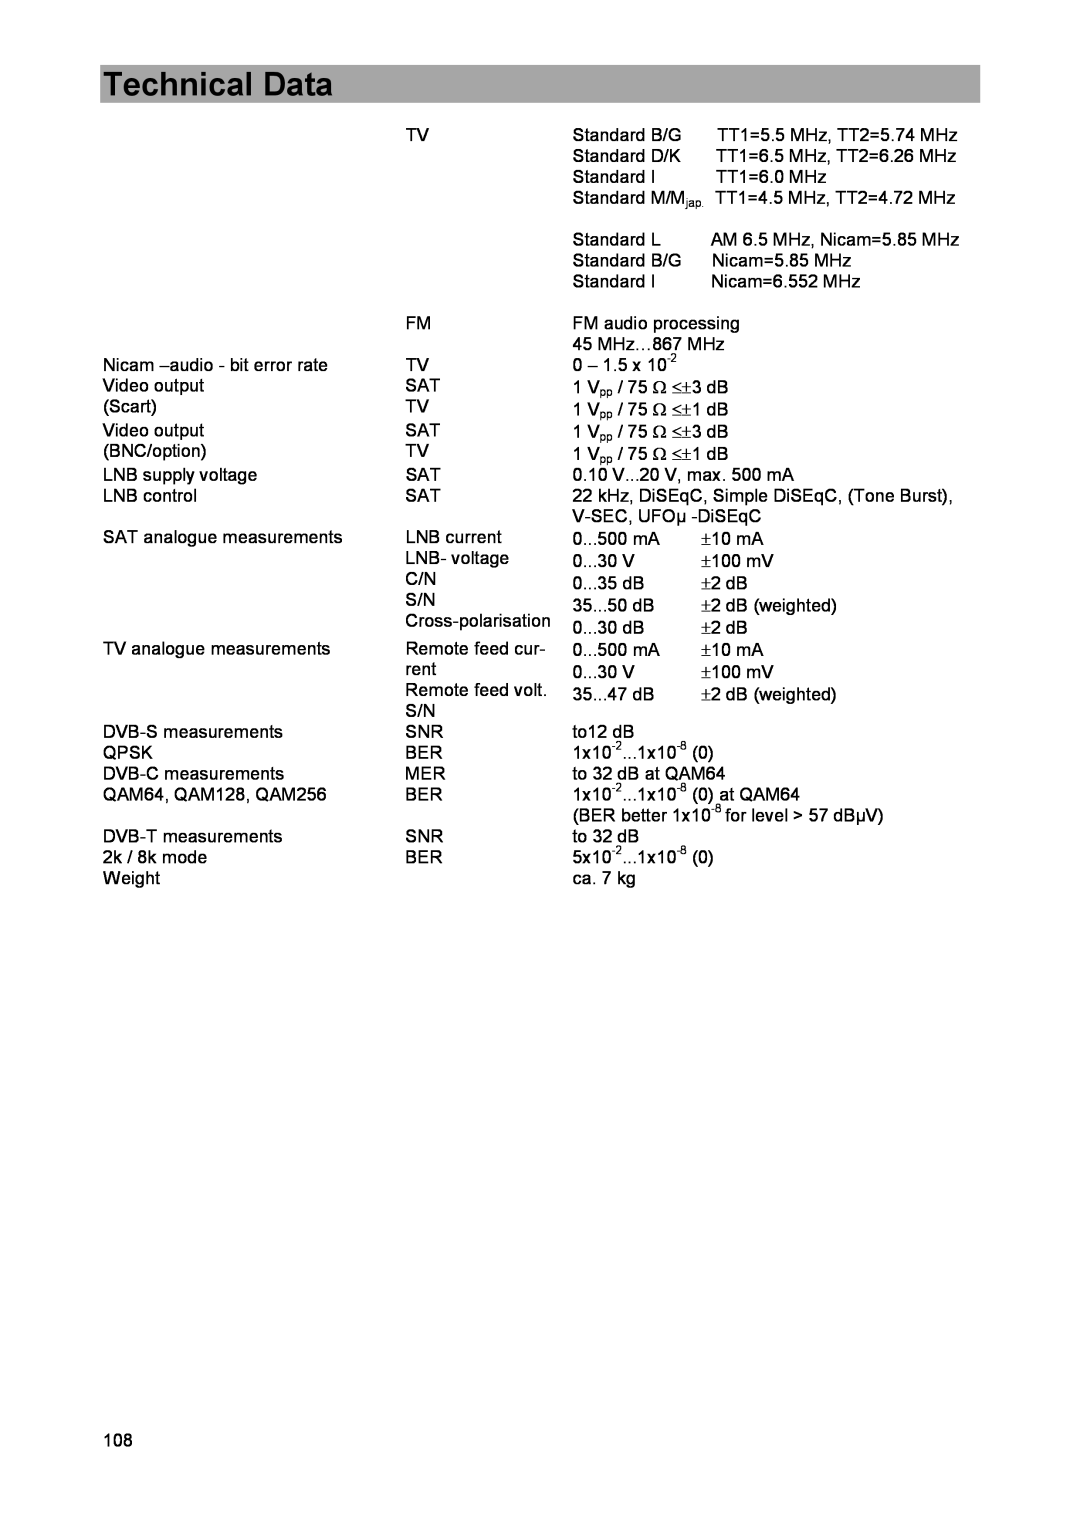 DreamGEAR MSK 33 manual Technical Data 